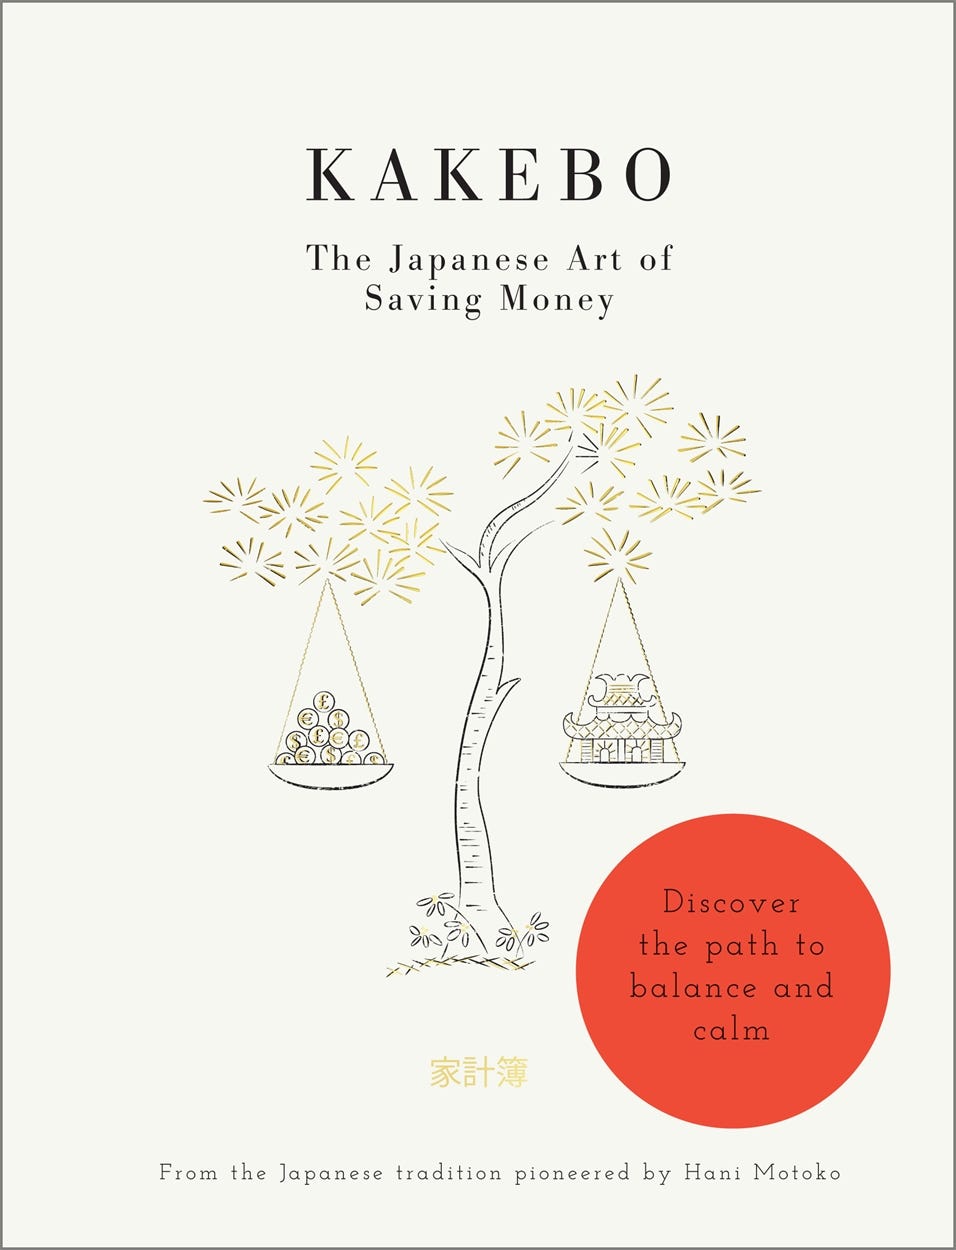 Kakeibo — The Japanese Art of Saving Money, by Yin Maythu